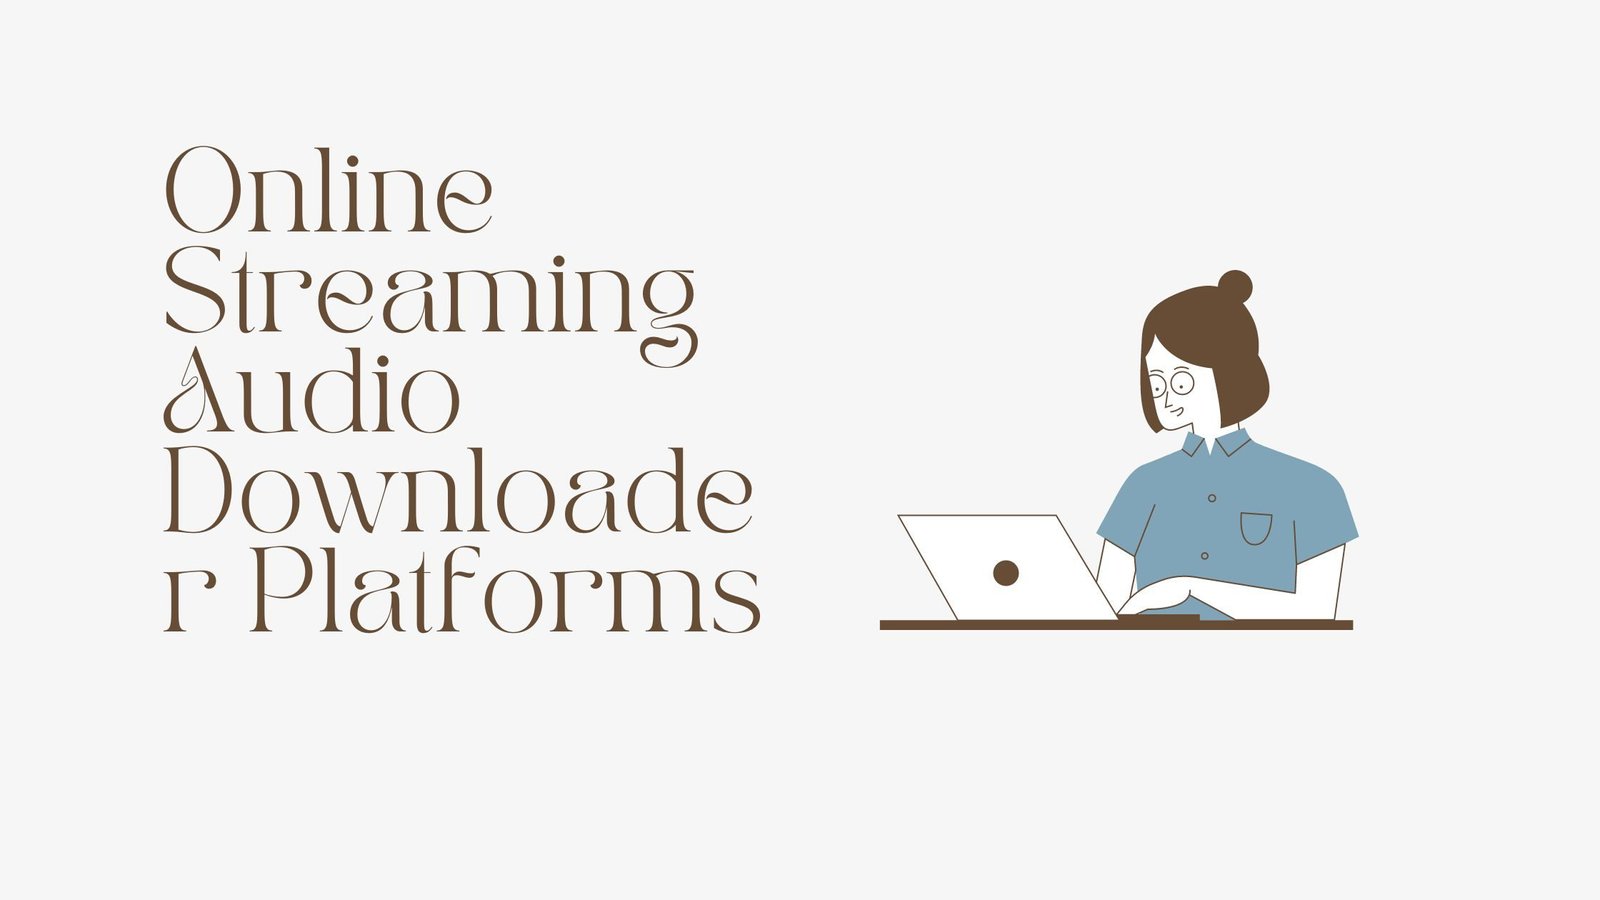 Online streaming audio downloader platforms